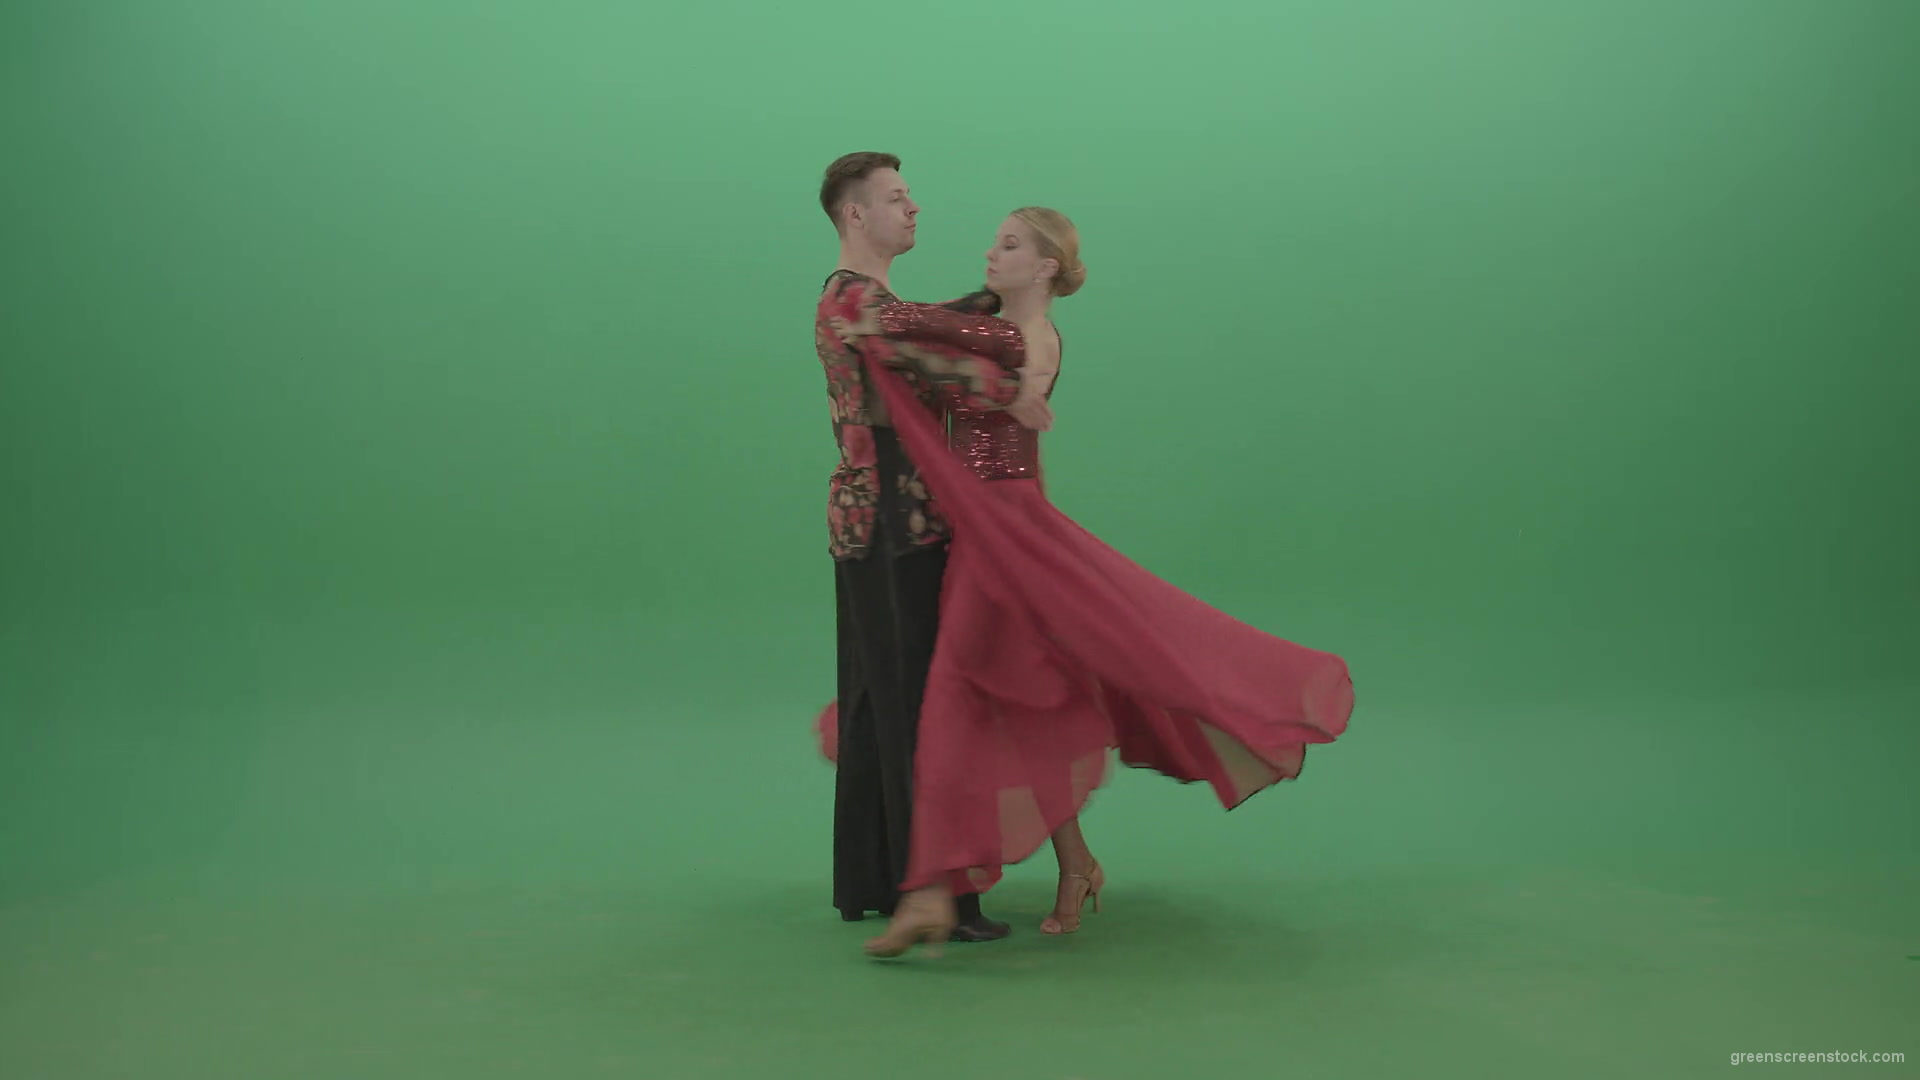 Man-and-woman-dancing-ballroom-dance-spinning-in-green-screen-studio-4k-Video-Footage-1920_004 Green Screen Stock